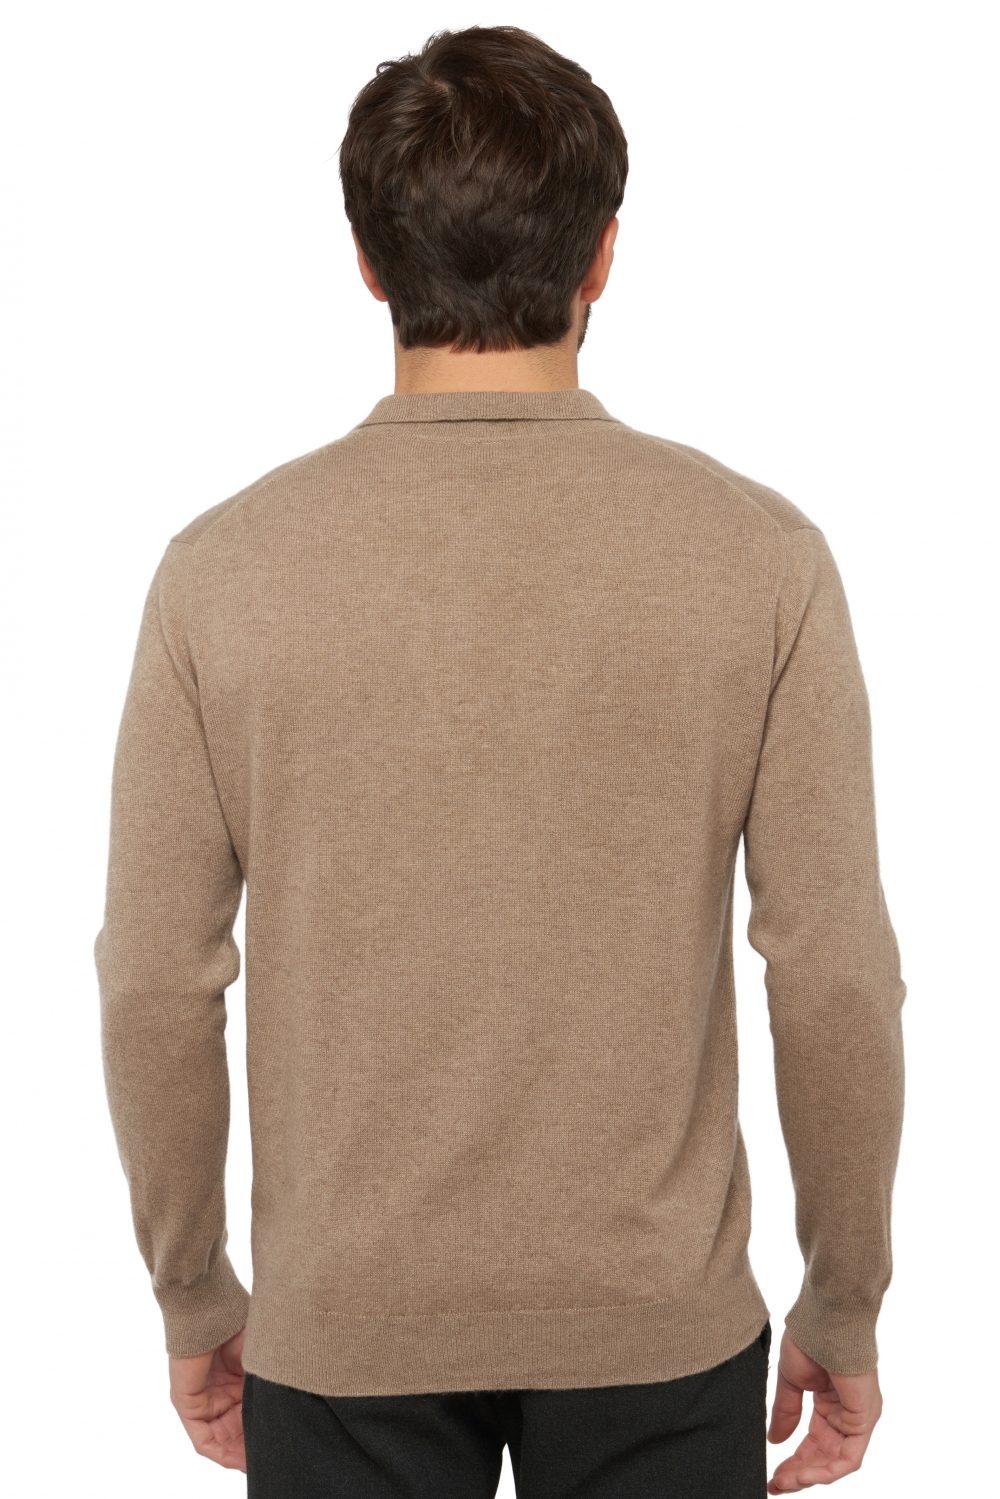  men polo style sweaters premium natural alexandre dolma natural xxl